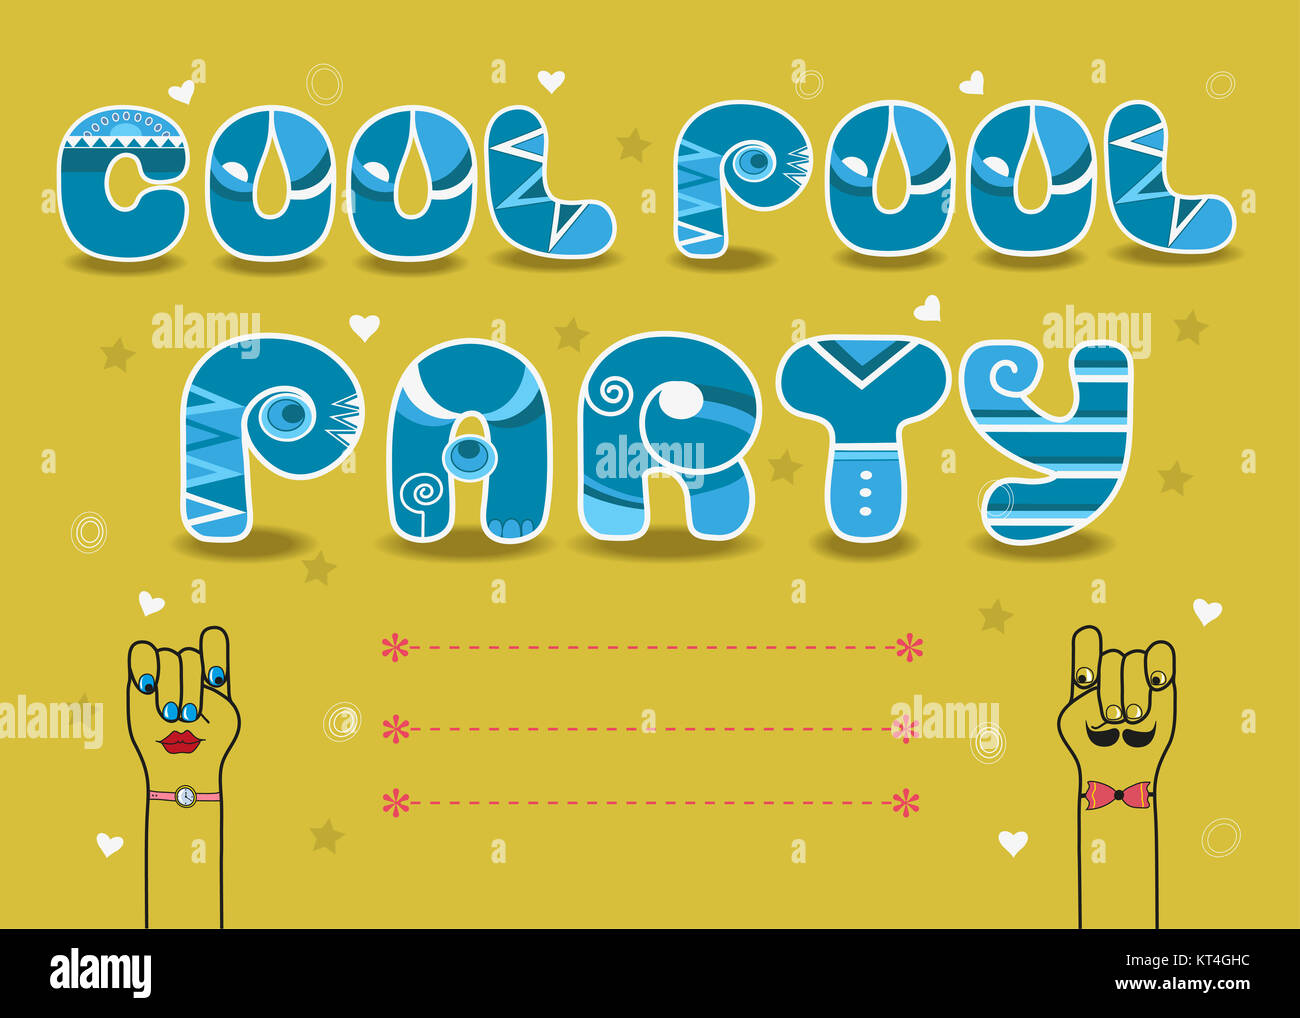 Cool Pool Party Einladung Karte Stockfotografie Alamy